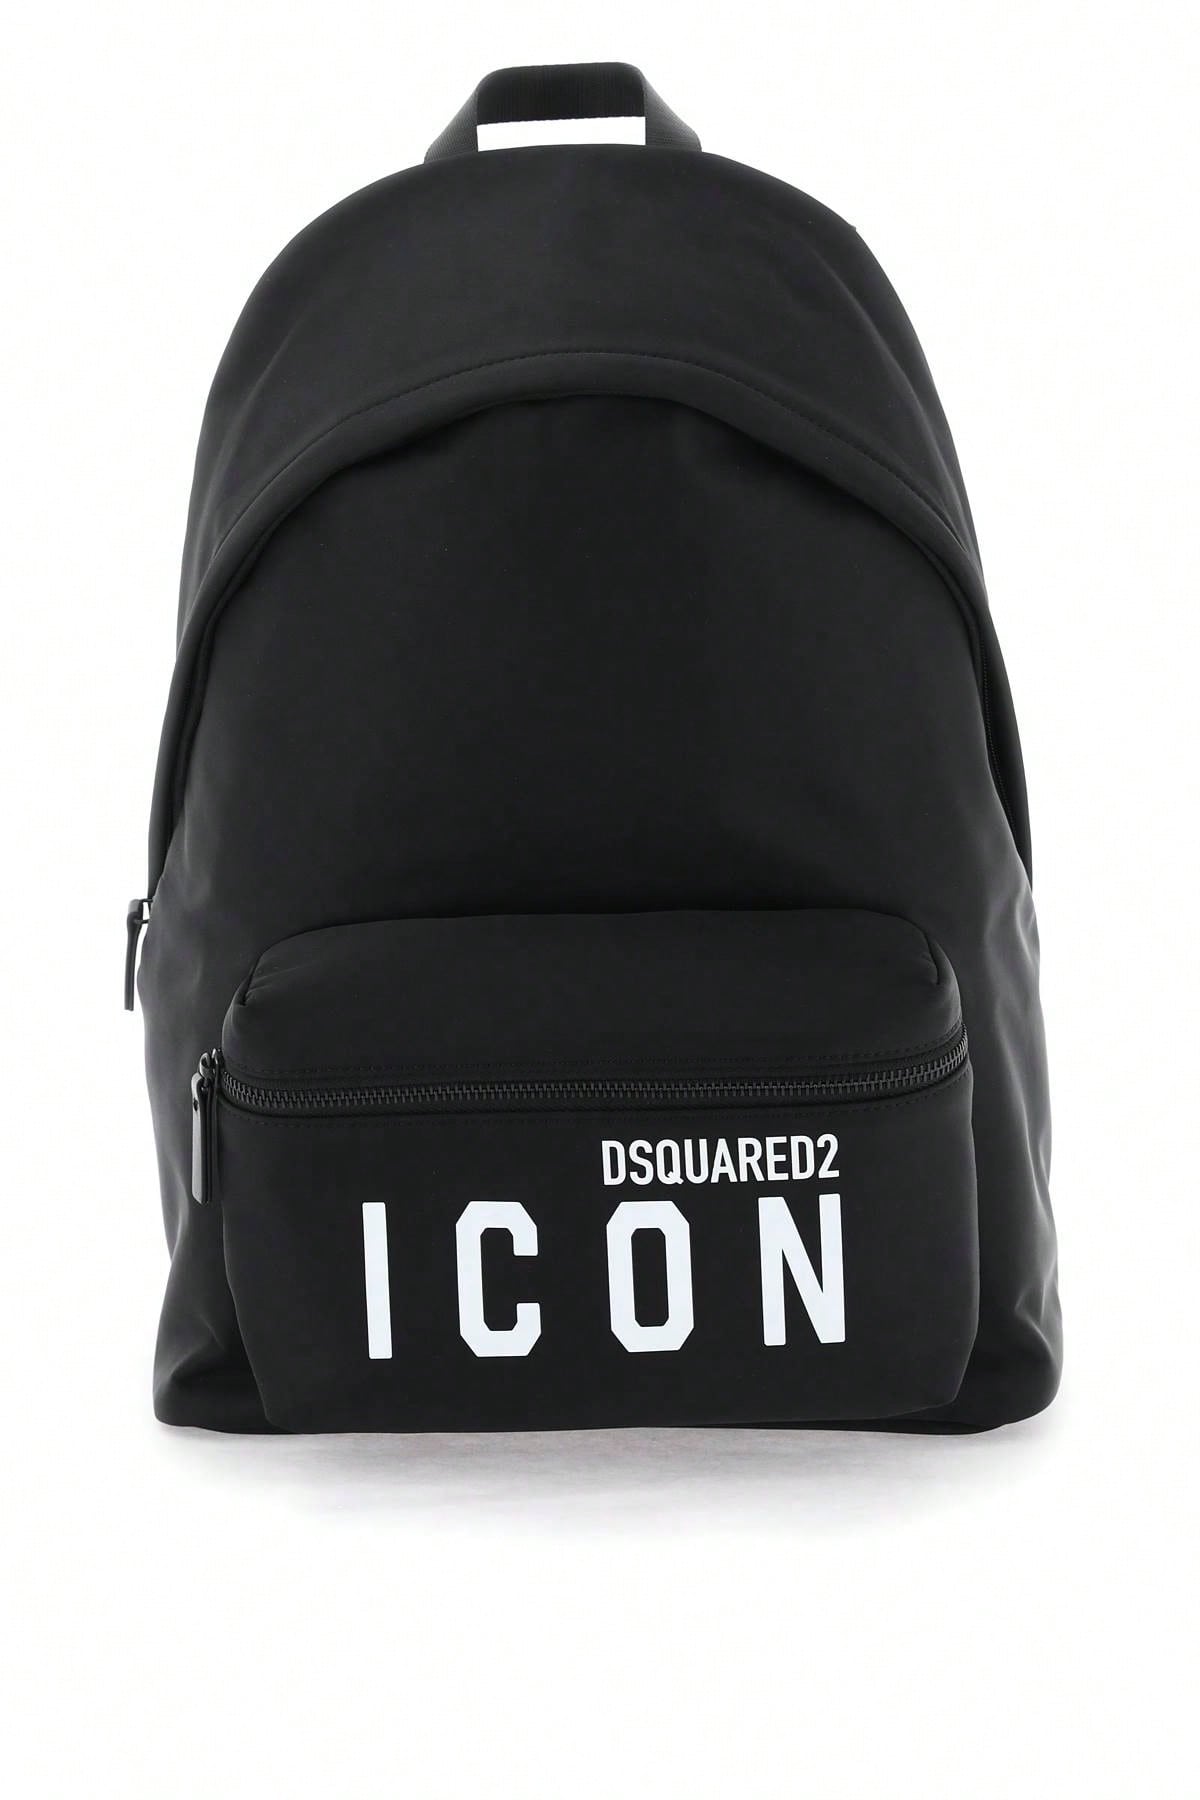 Рюкзак Dsquared2 Icon из нейлона, черный